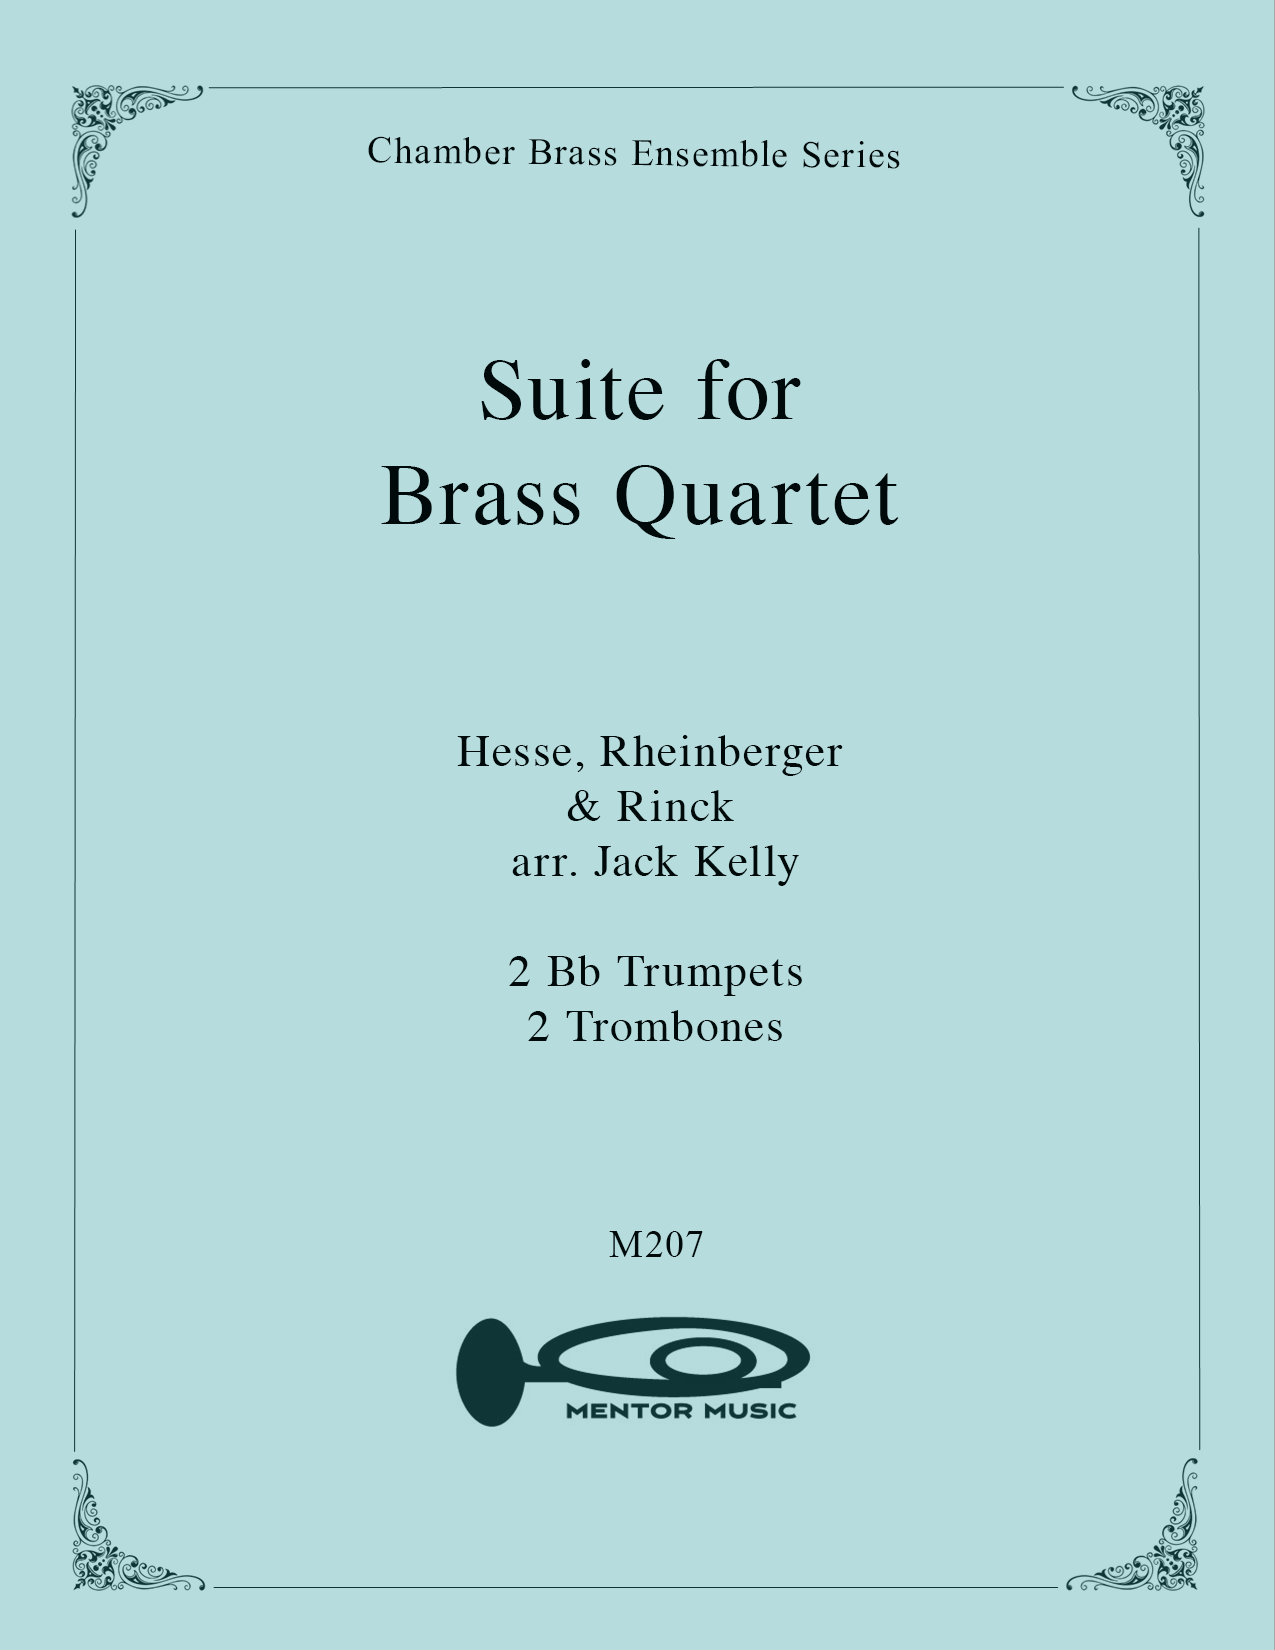 Suite for Brass Quartet (Hesse, Rheinberger, & Rinck)